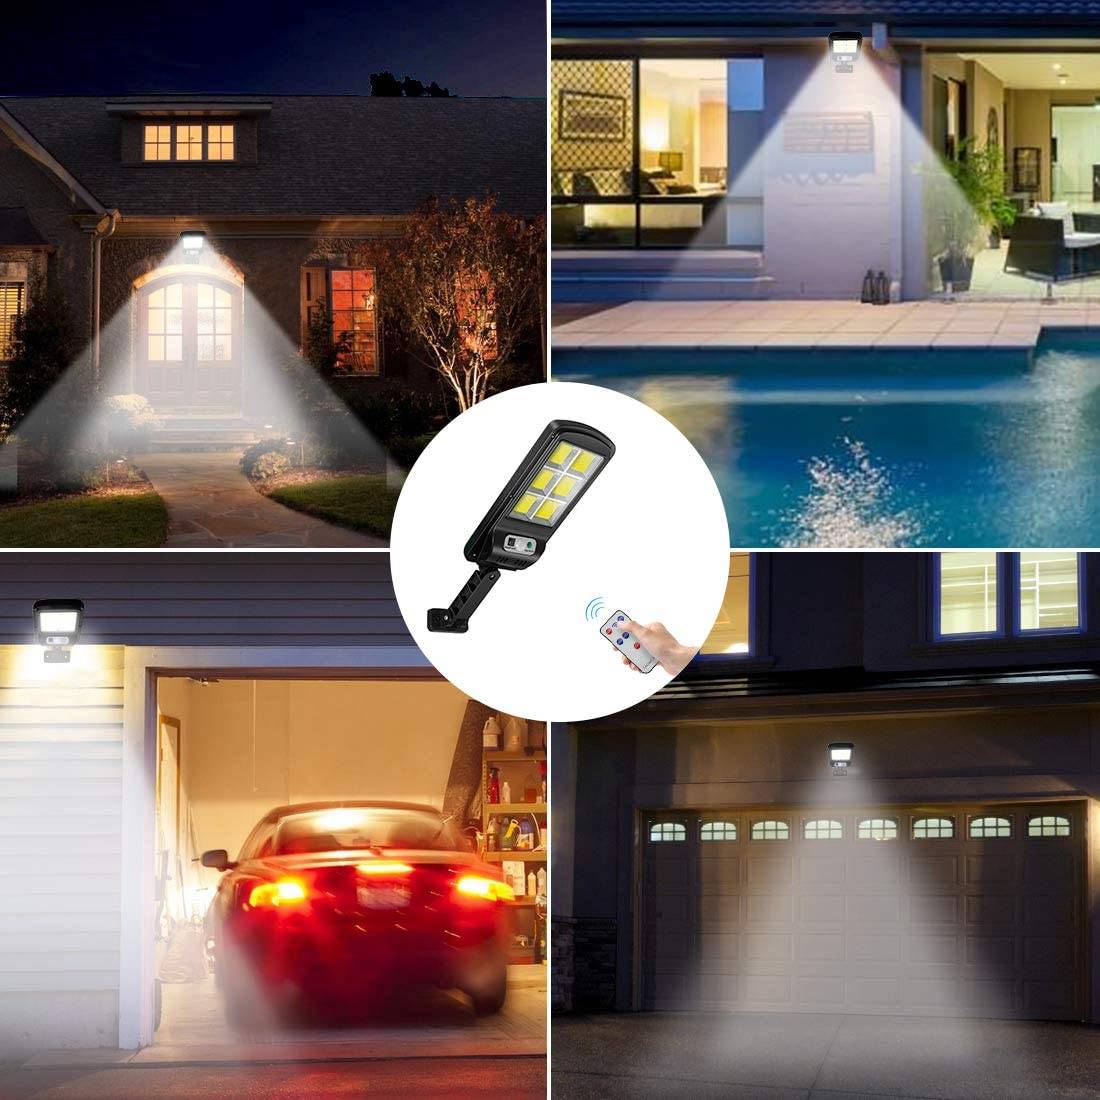 45 Solar LED Light Outdoor Garden Waterproof Wireless Security Motion 3 Modes